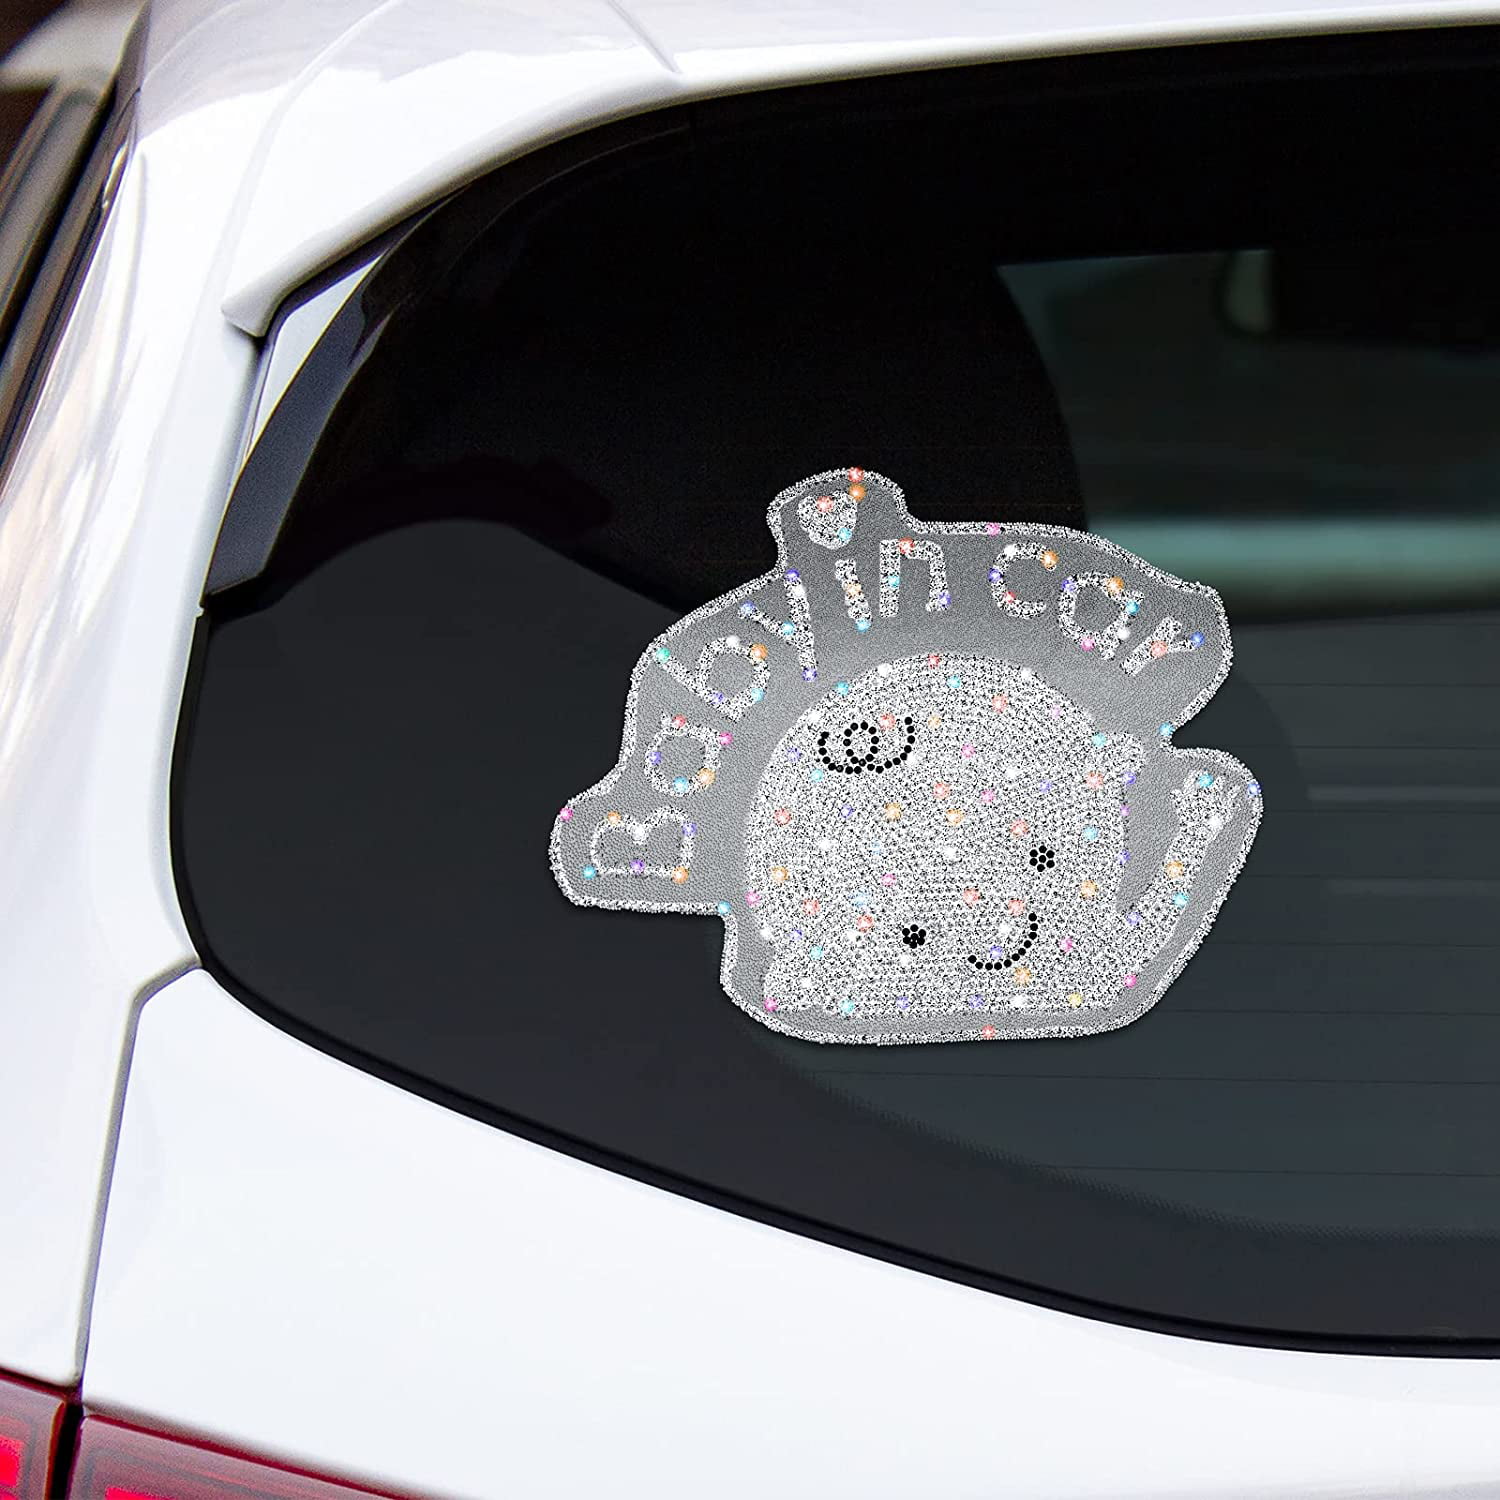 "Baby In Car" Waving Baby on Board Safety Sign Cute Car Decal Vinyl StickerWRD 